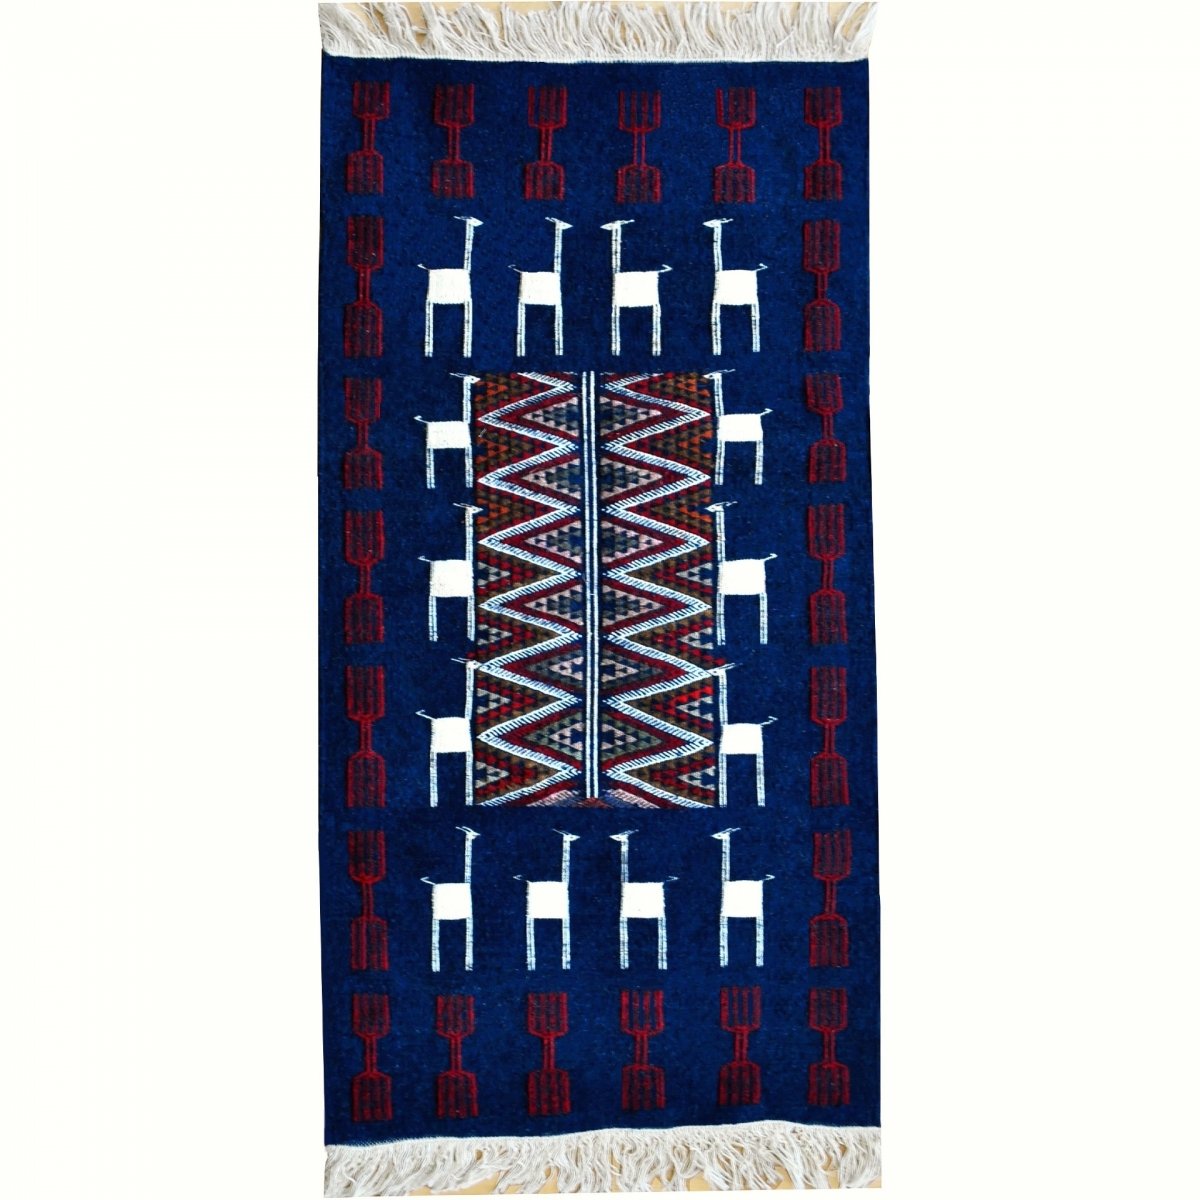 Berber tapijt Tapijt Kilim Ichbilia 60x115 Blauw/Wit/Rood (Handgeweven, Wol, Tunesië) Tunesisch kilimdeken, Marokkaanse stijl. R